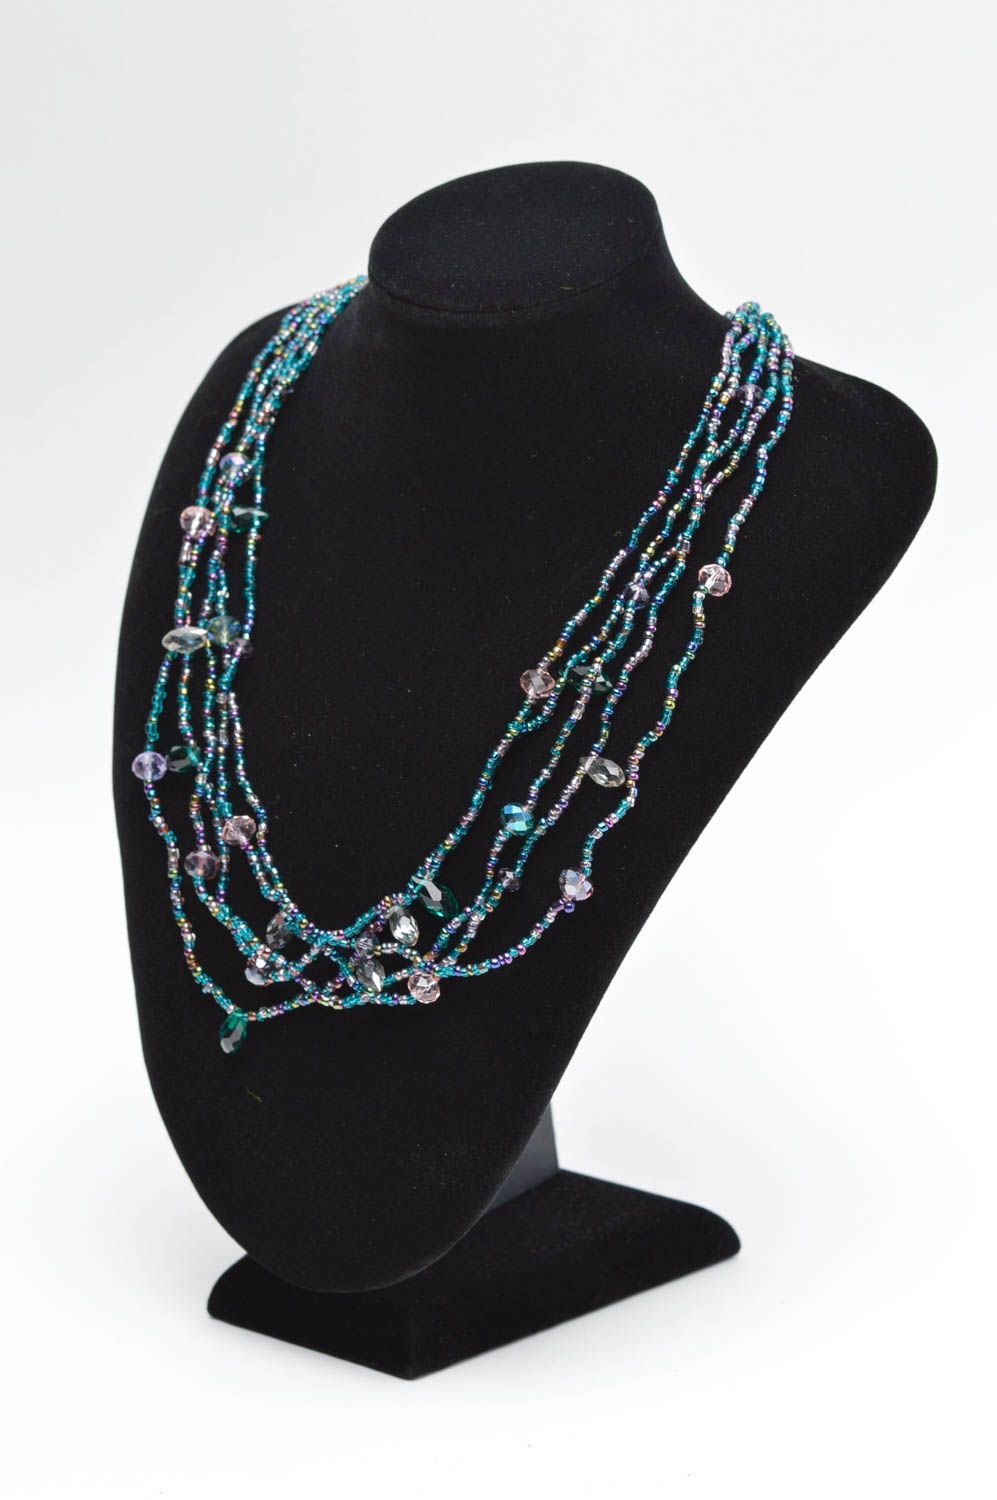 Handmade necklace designer accessory unusual jewelry gift ideas elite jewelry photo 5